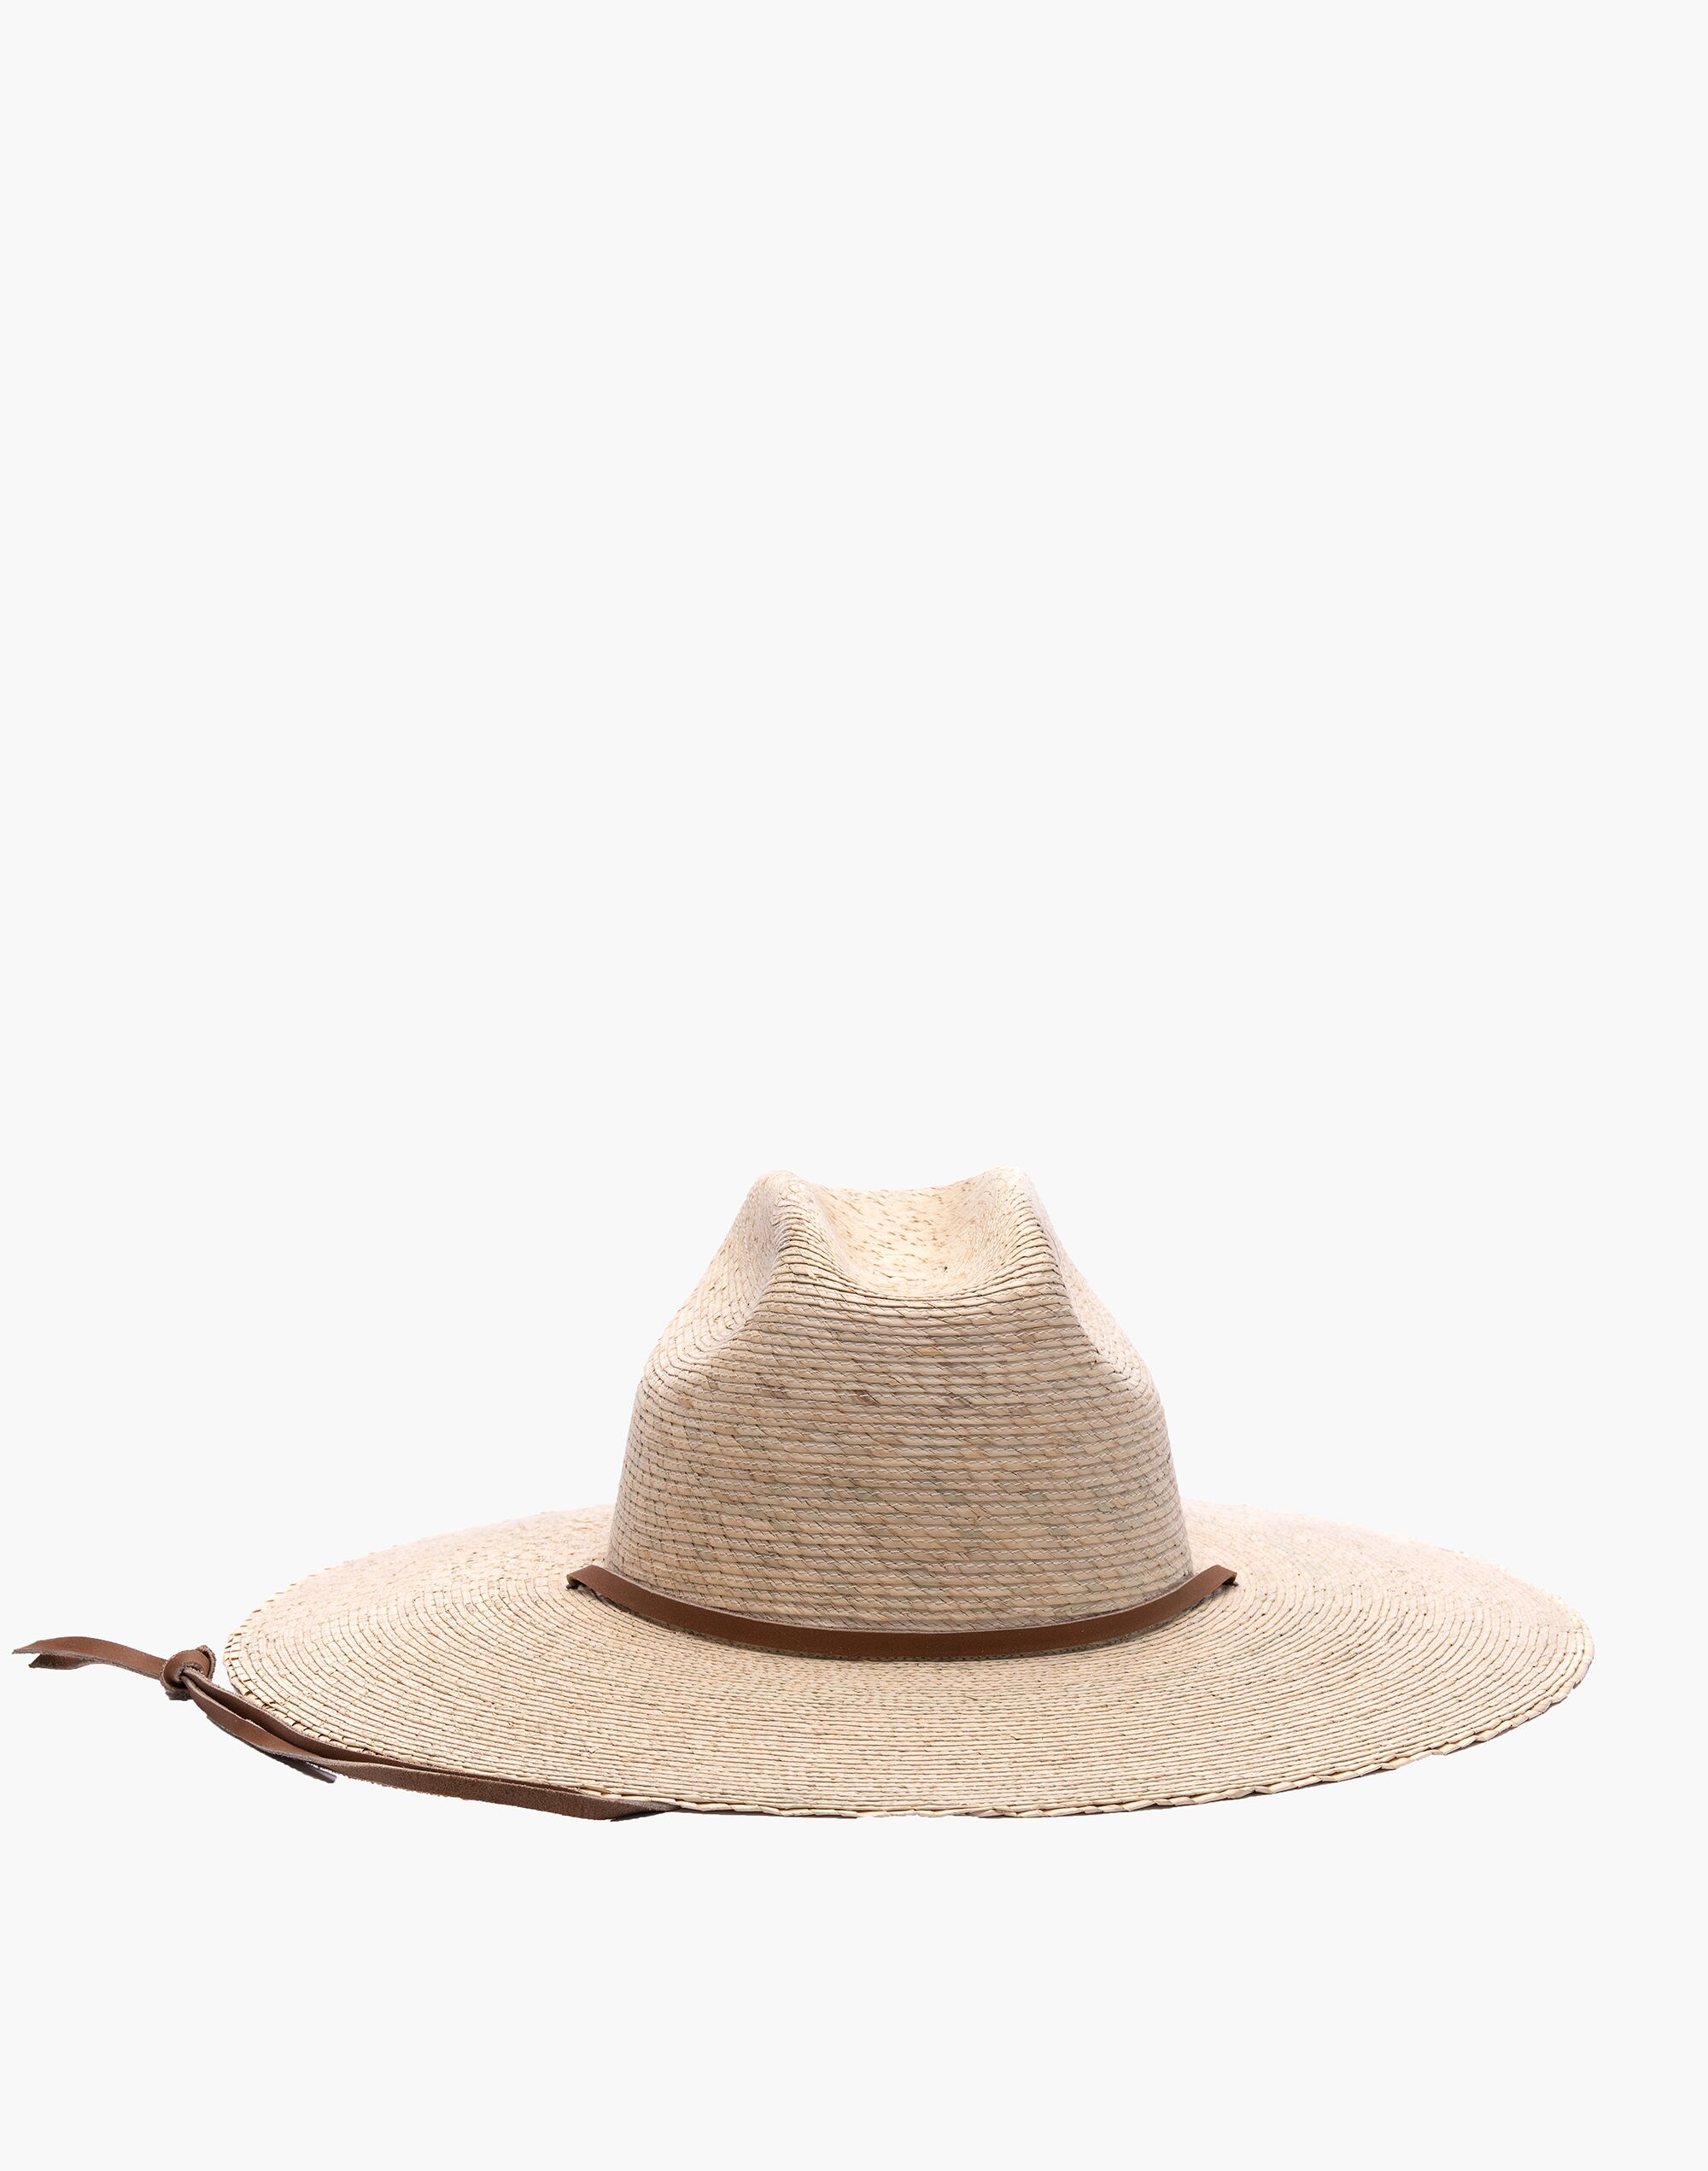 ASN Straw Surfer Boi Wide-Brimmed Hat